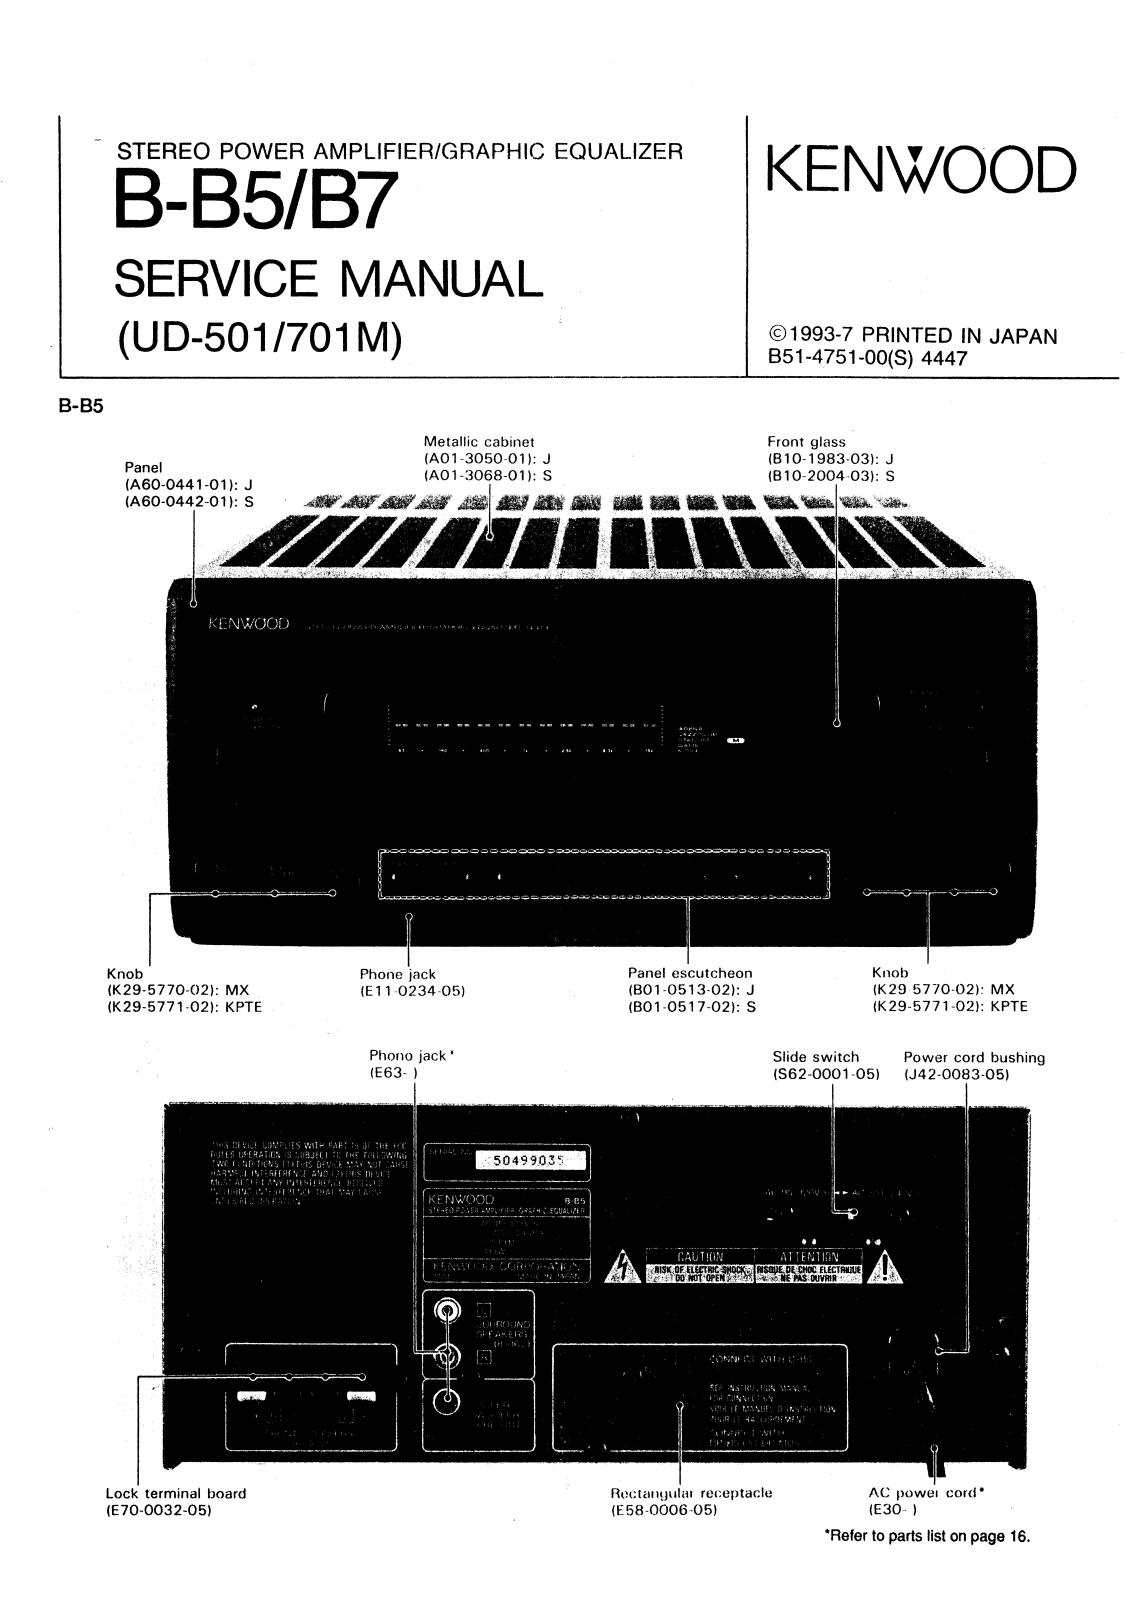 Kenwood UD-701-M, UD-501 Service Manual